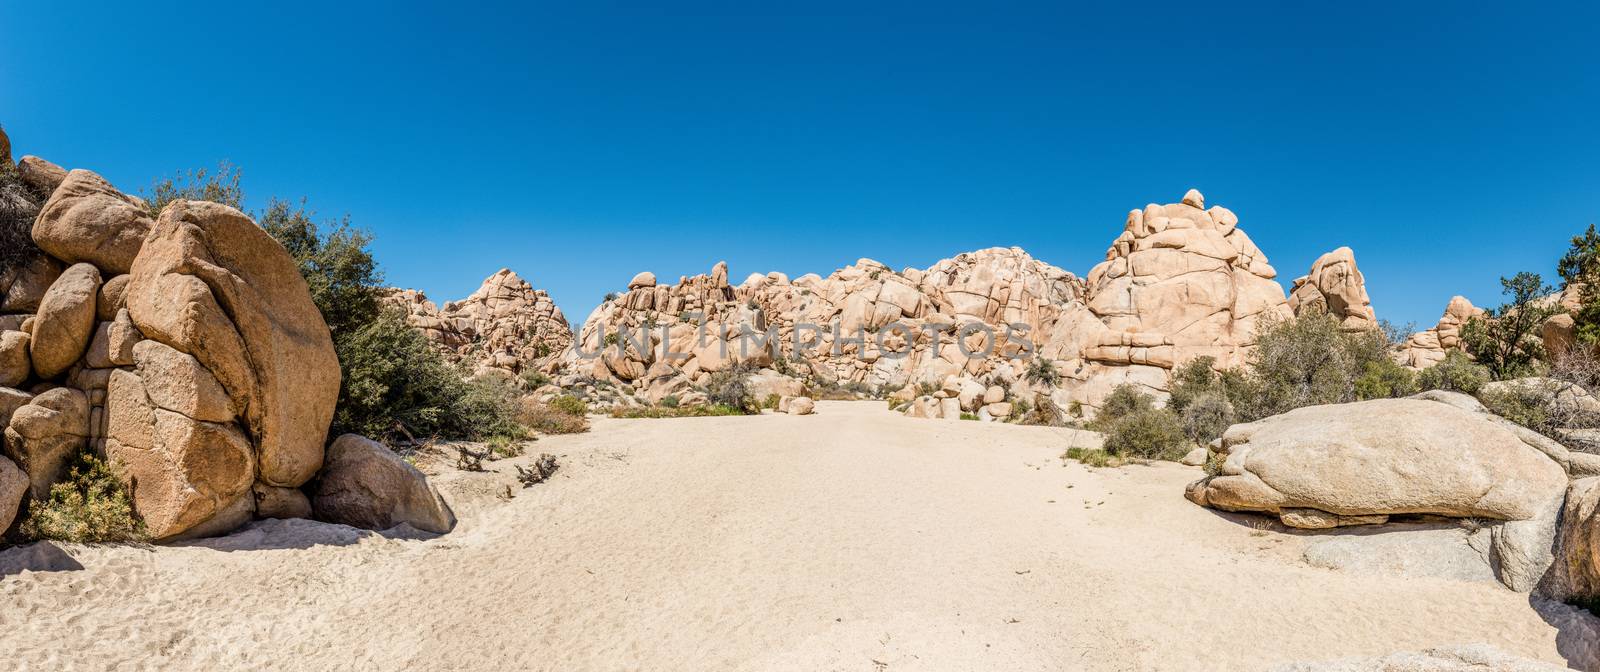 Panorama of granite boulders in the Wonderland of Rocks area alo by Njean